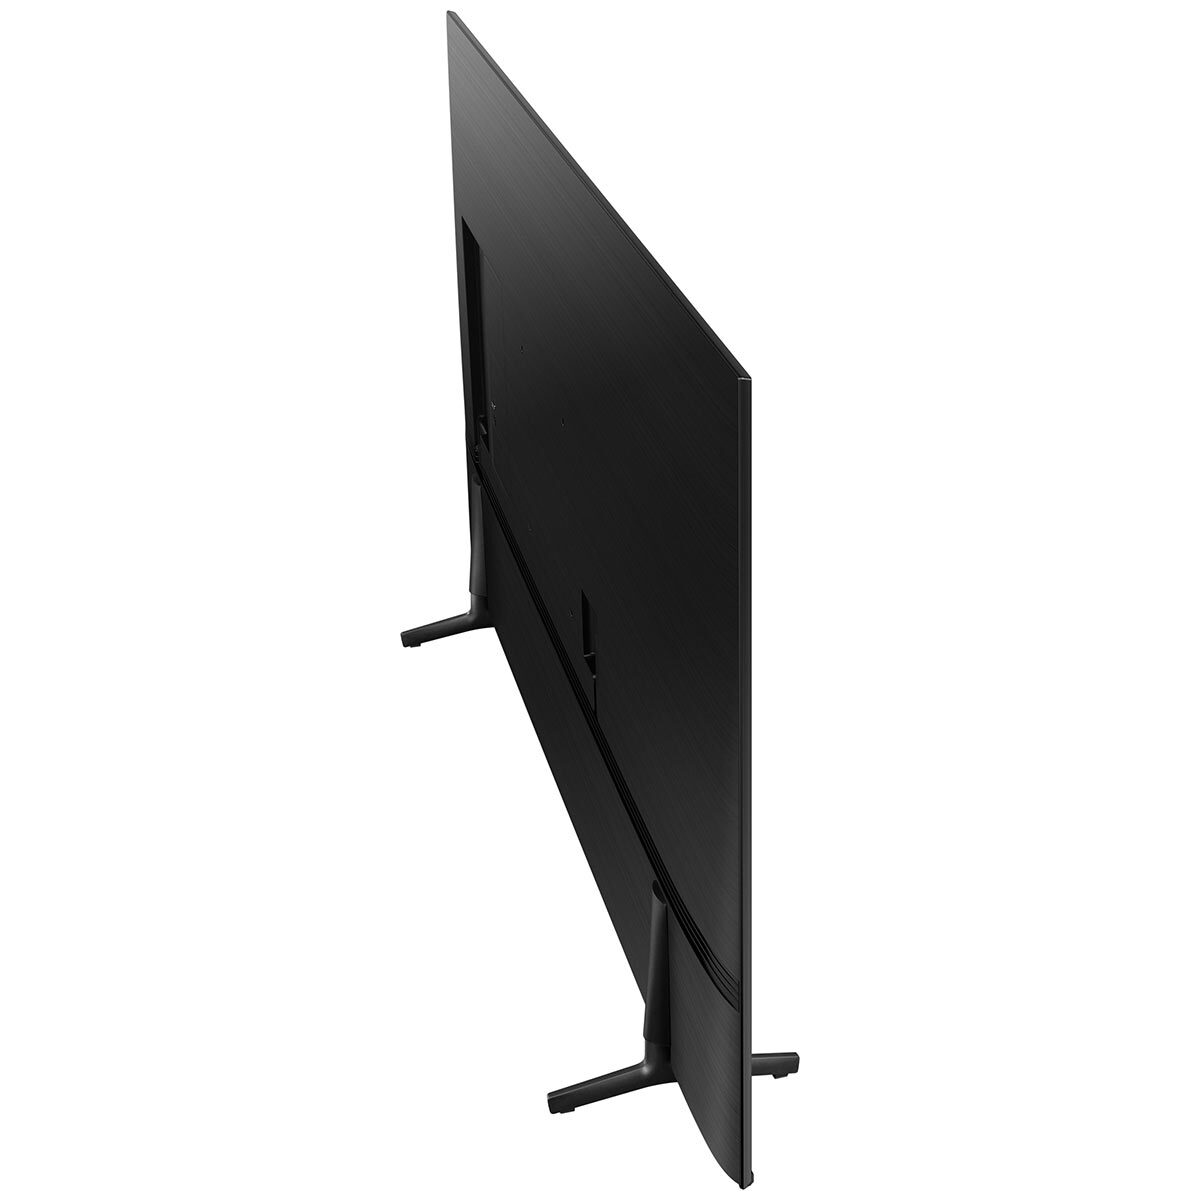 Buy Samsung QE50Q65AAUXXU 50 Inch QLED 4K Ultra HD Smart TV at costco.co.uk